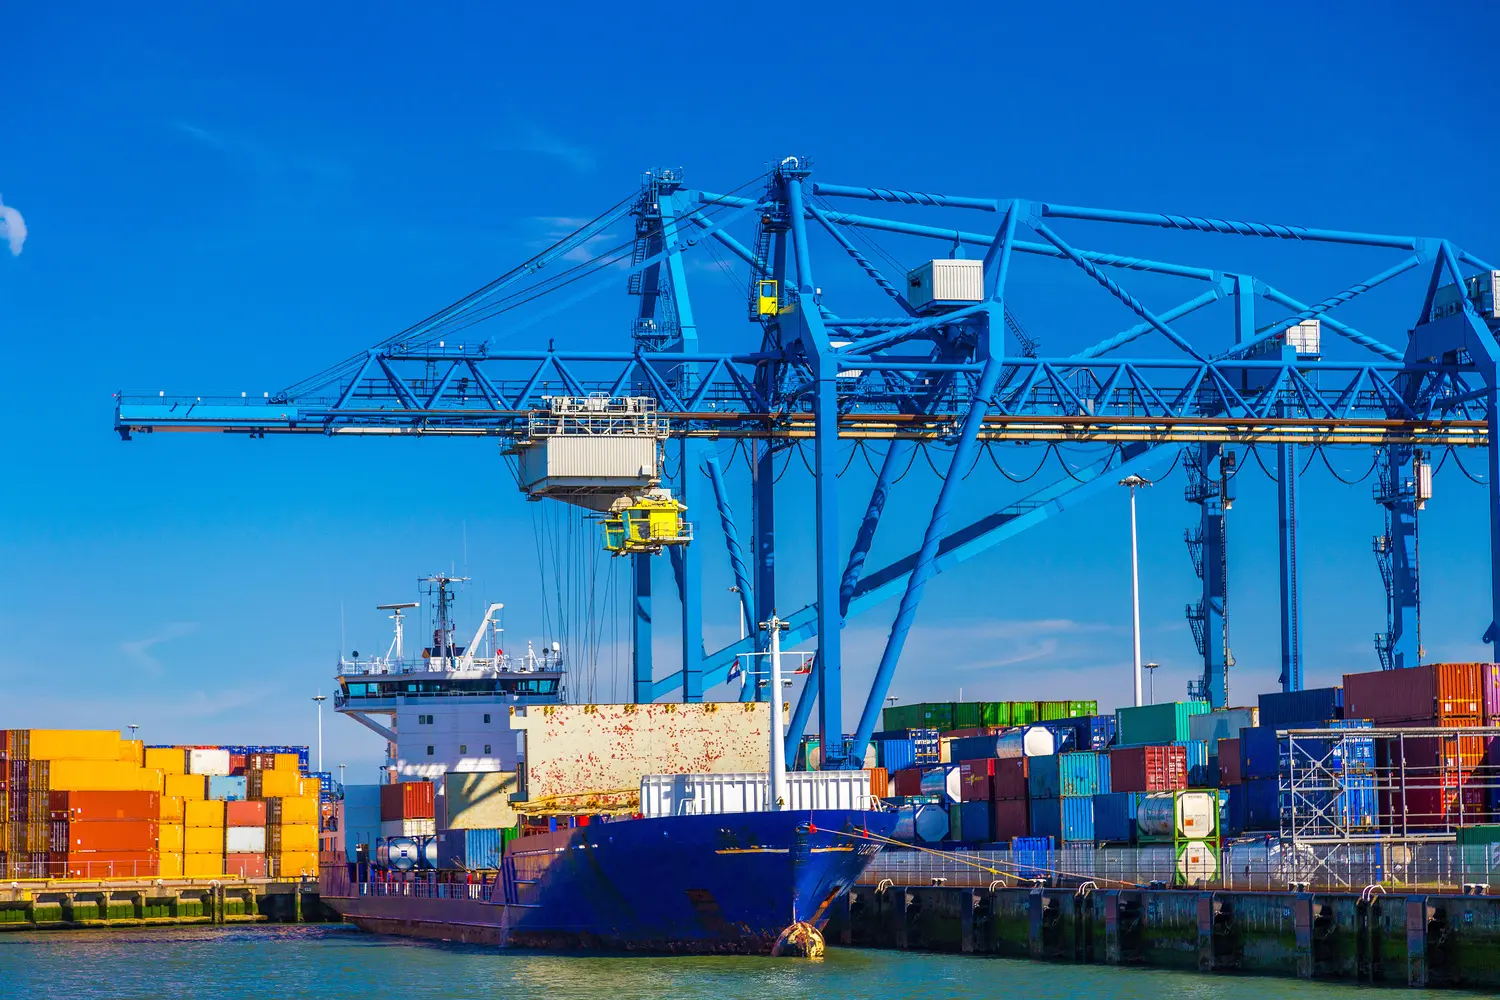 View of cranes in port